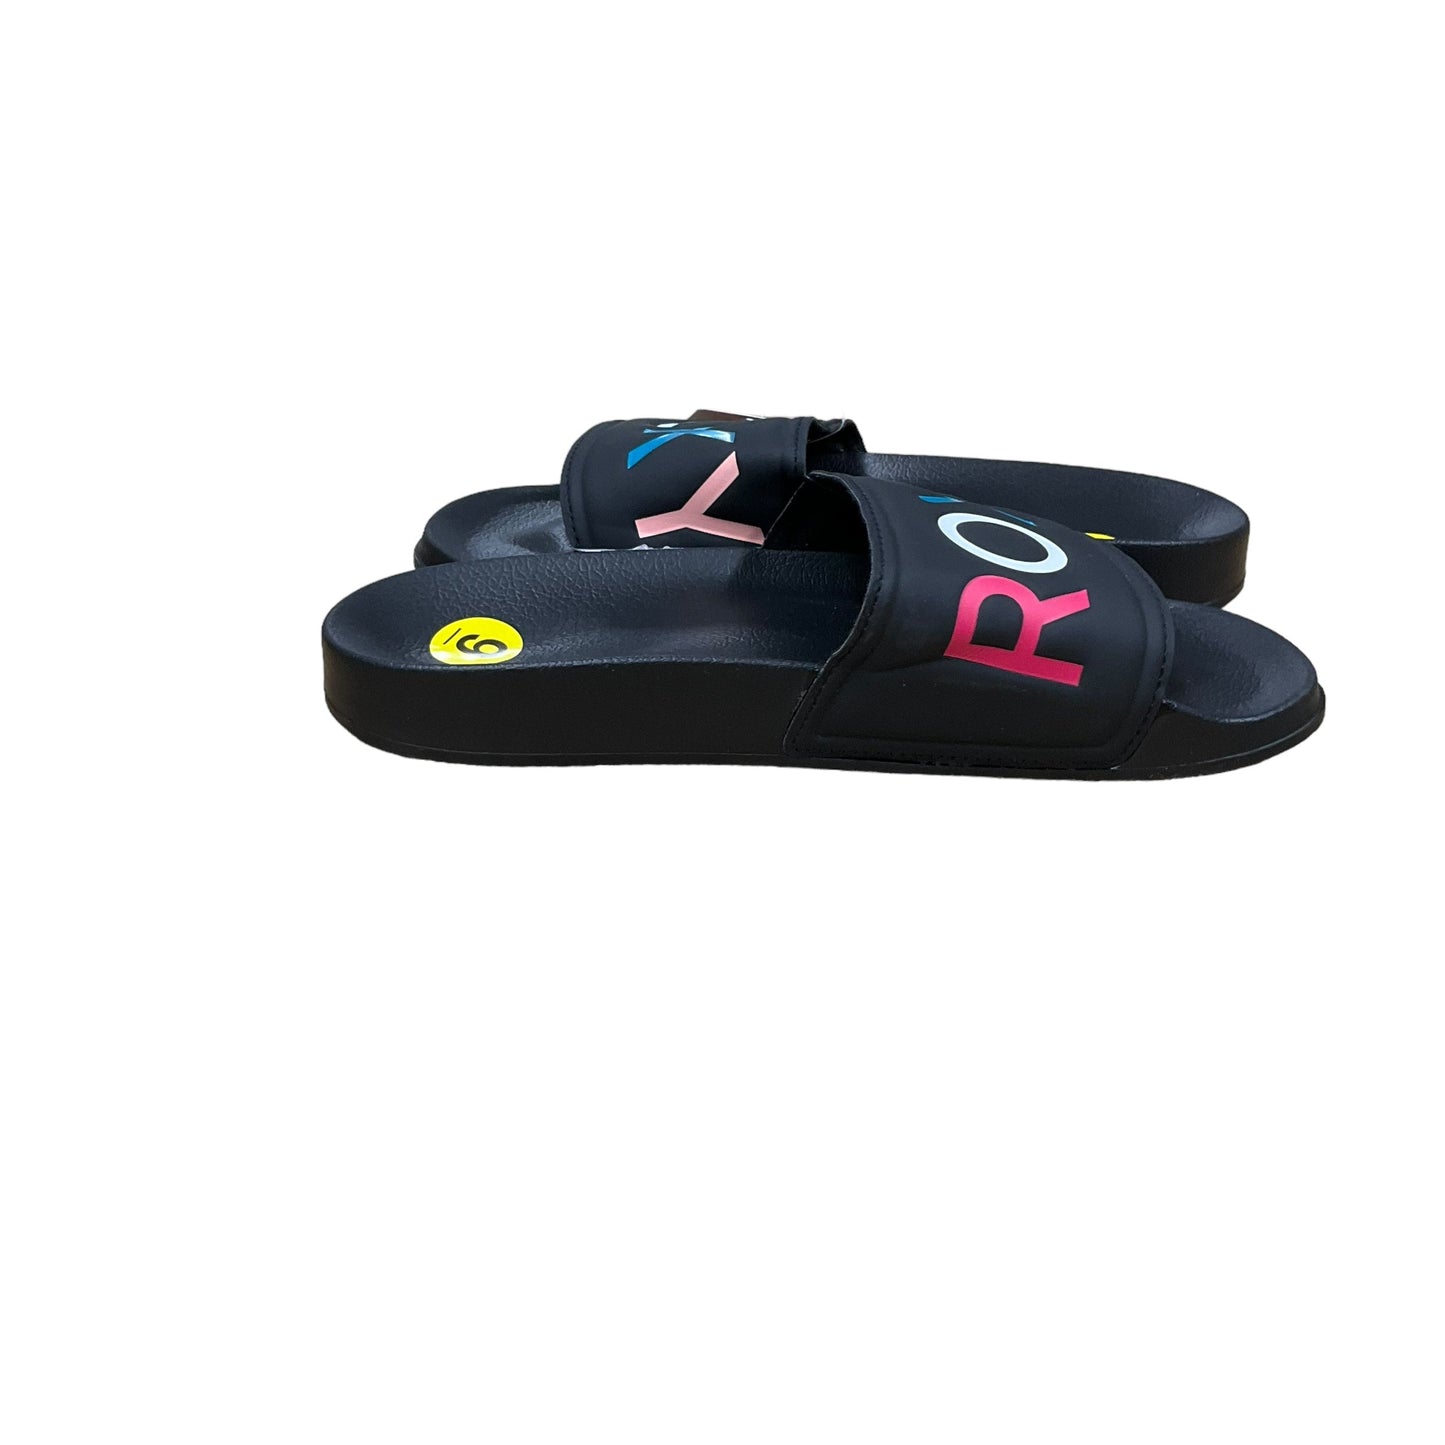 Black Sandals Flats Roxy, Size 9